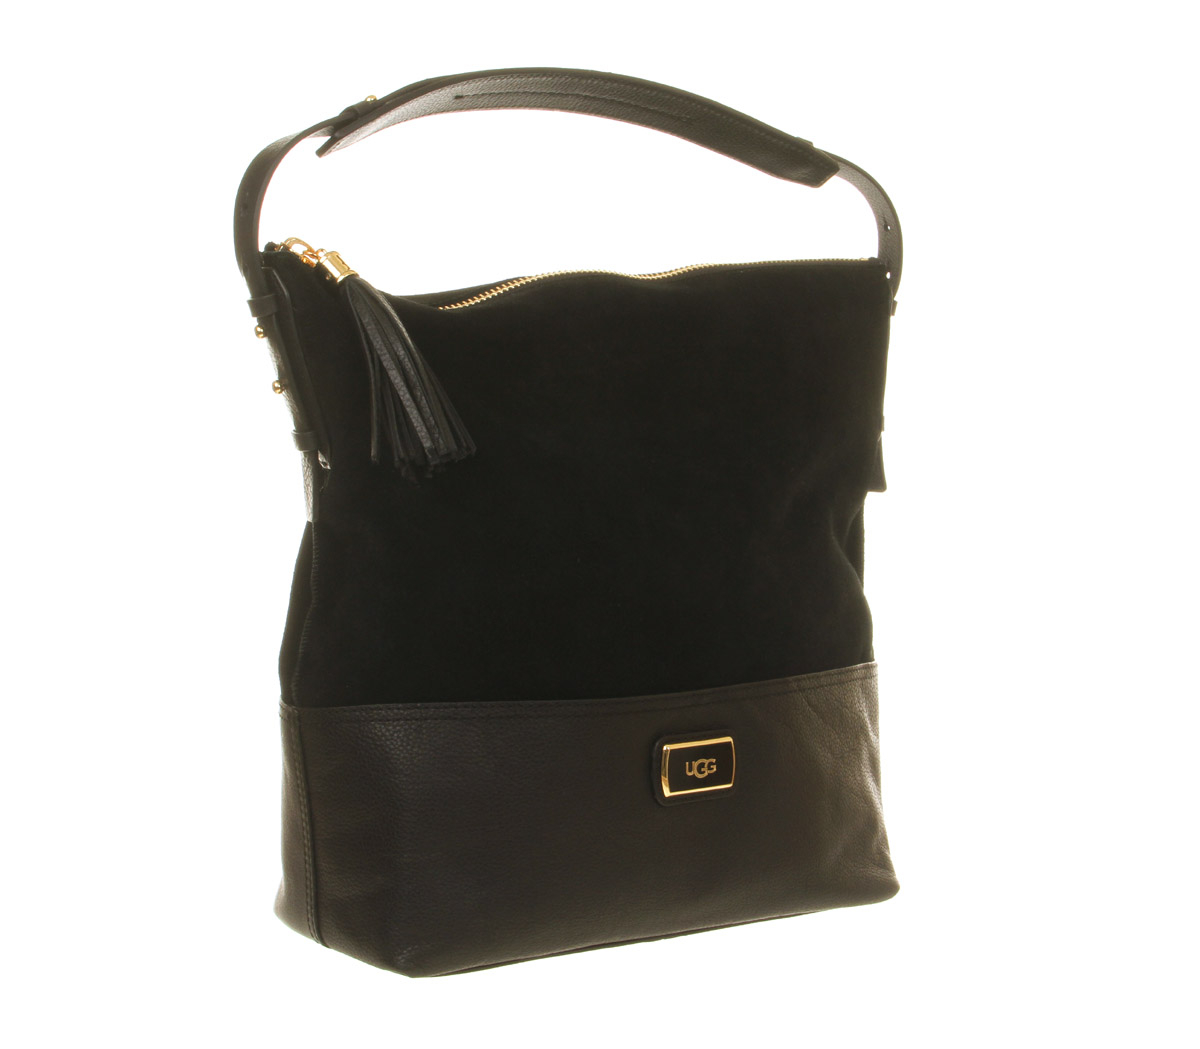 UGG Millie Hobo Bag in Black - Lyst